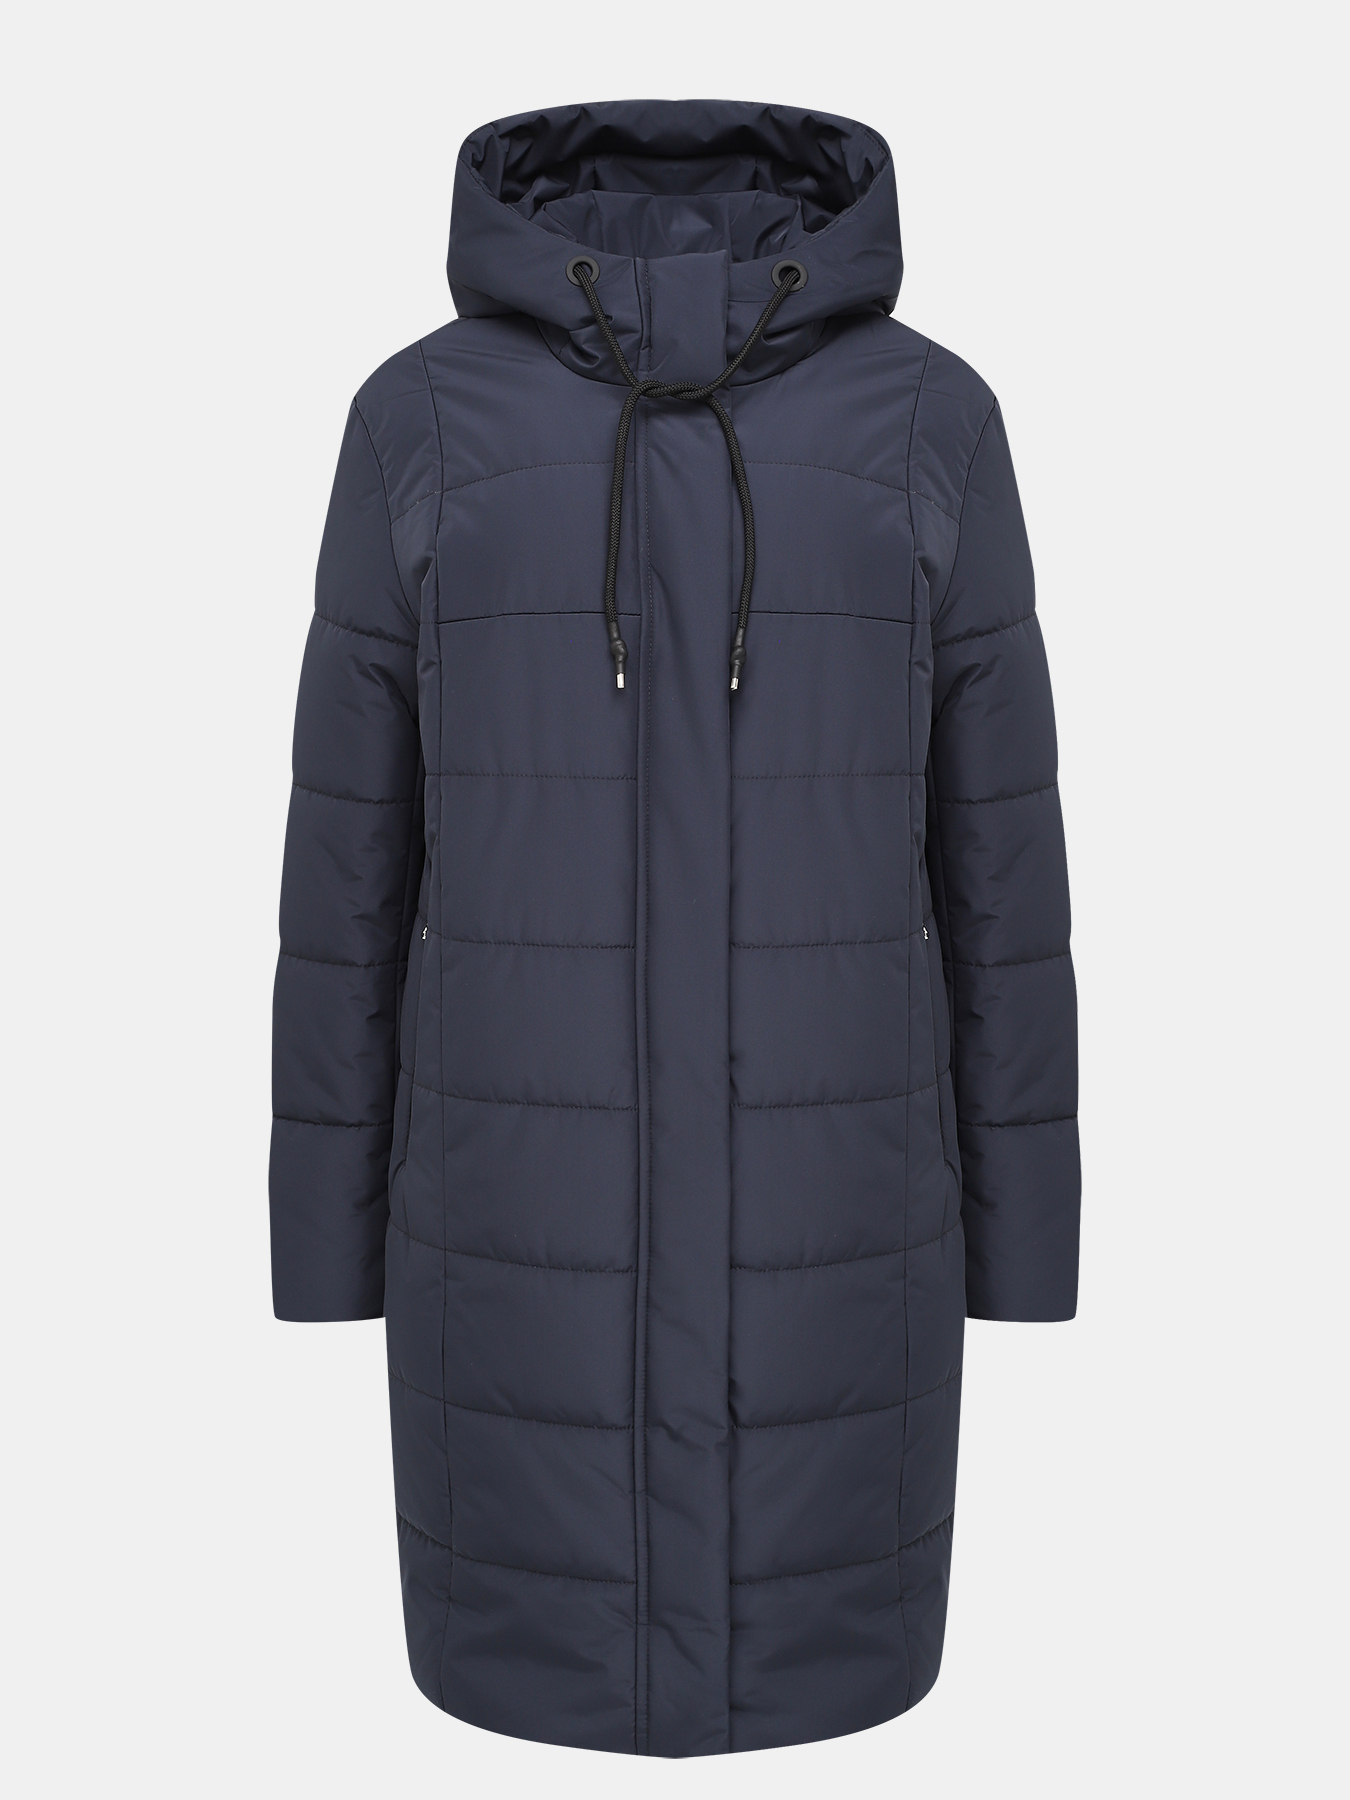 Пальто зимнее Maritta 433548-023, цвет темно-синий, размер 50